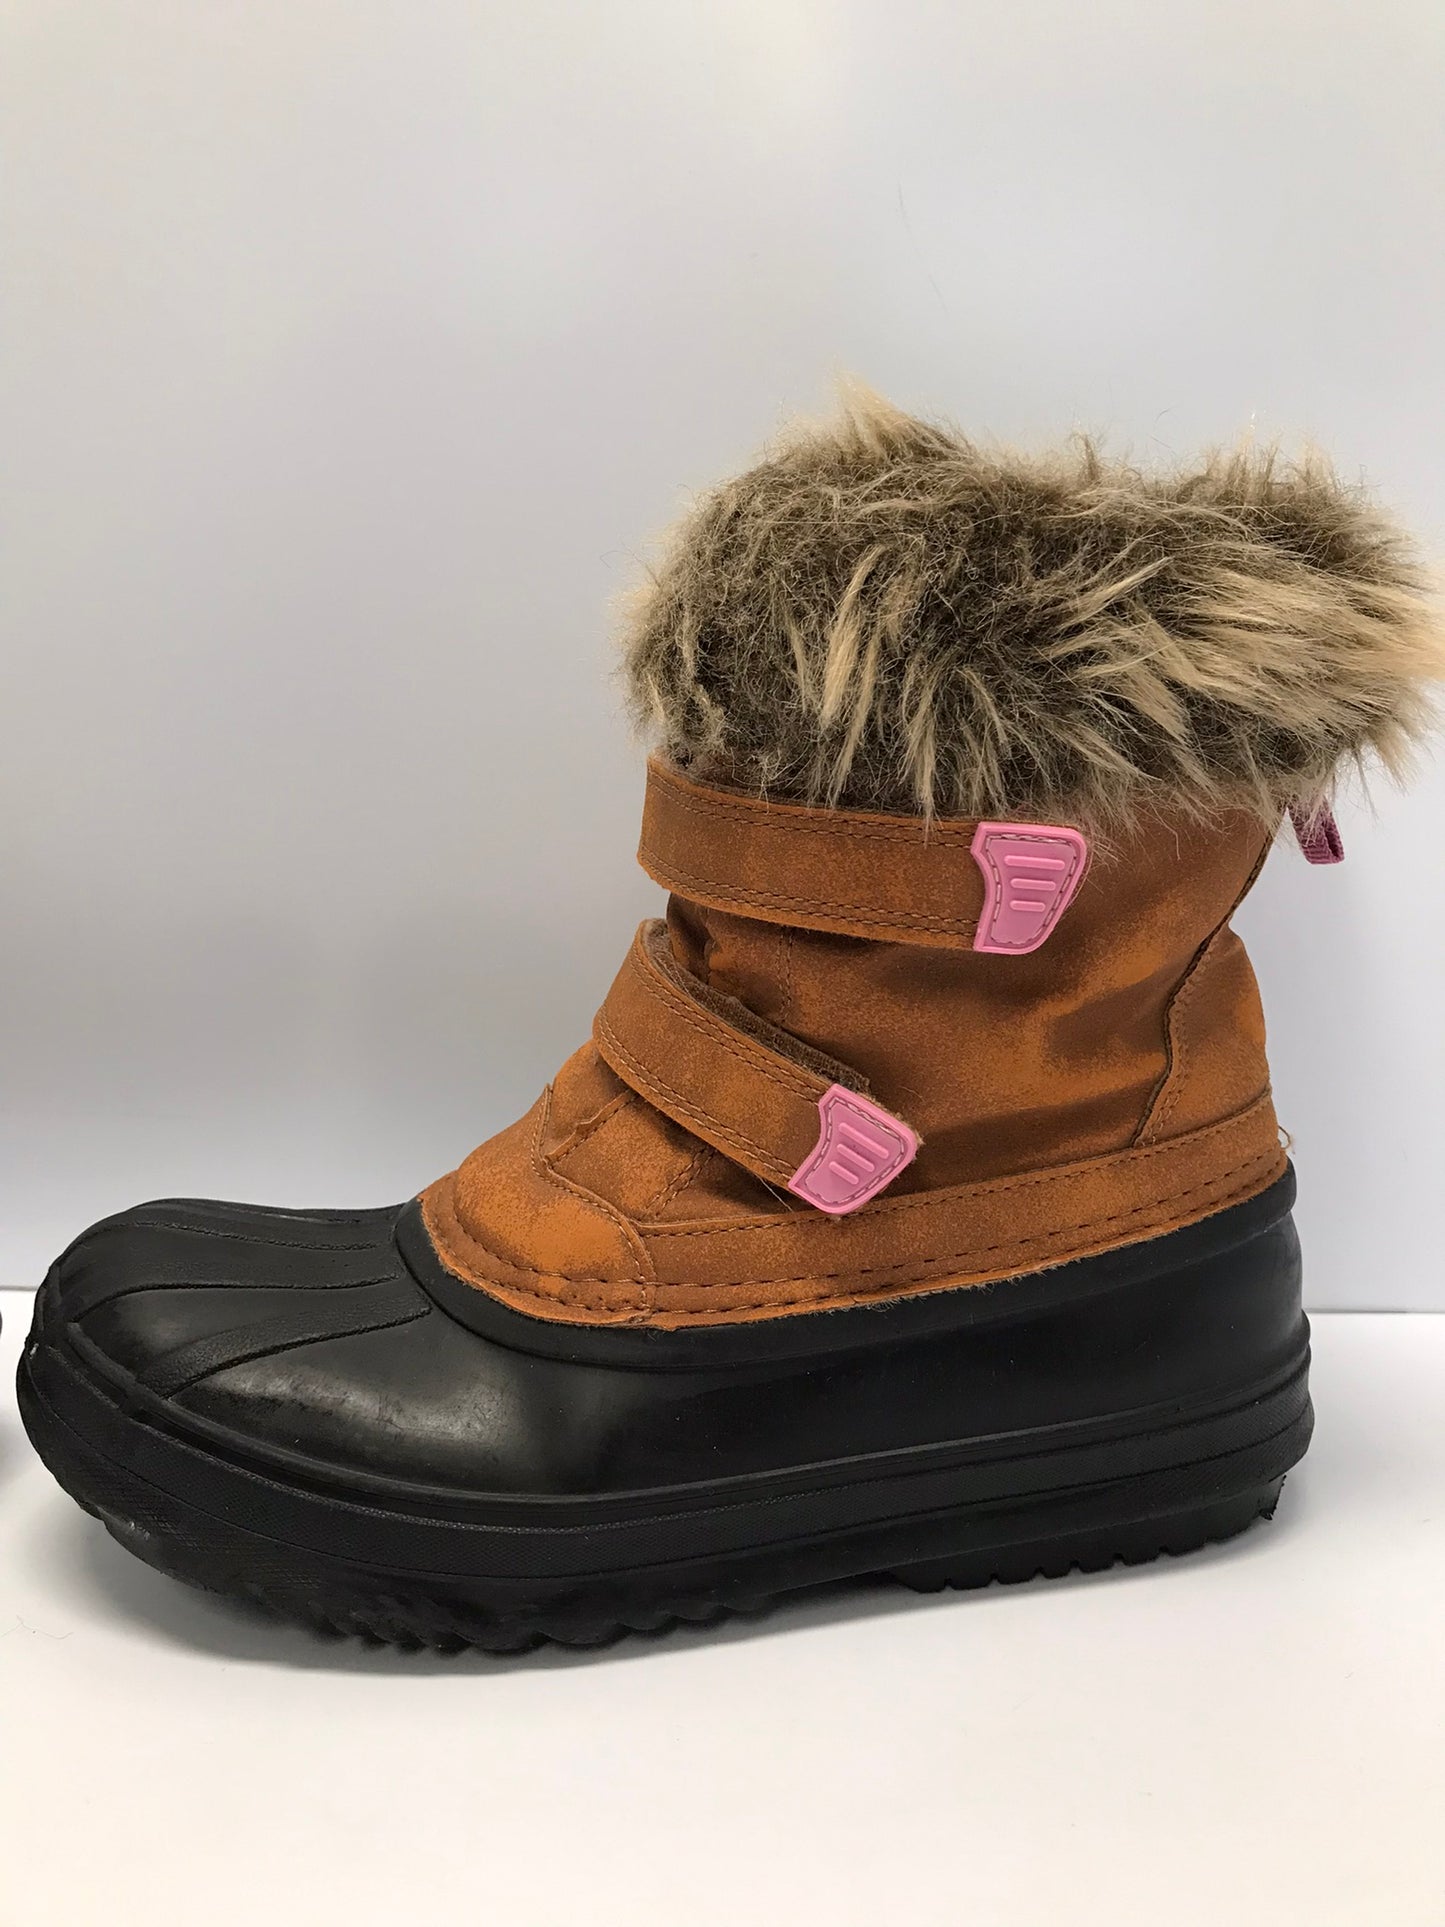 Winter Boots Child Size 4 Joe Fresh Adventure Faux Fur and Suade Excellent Soles